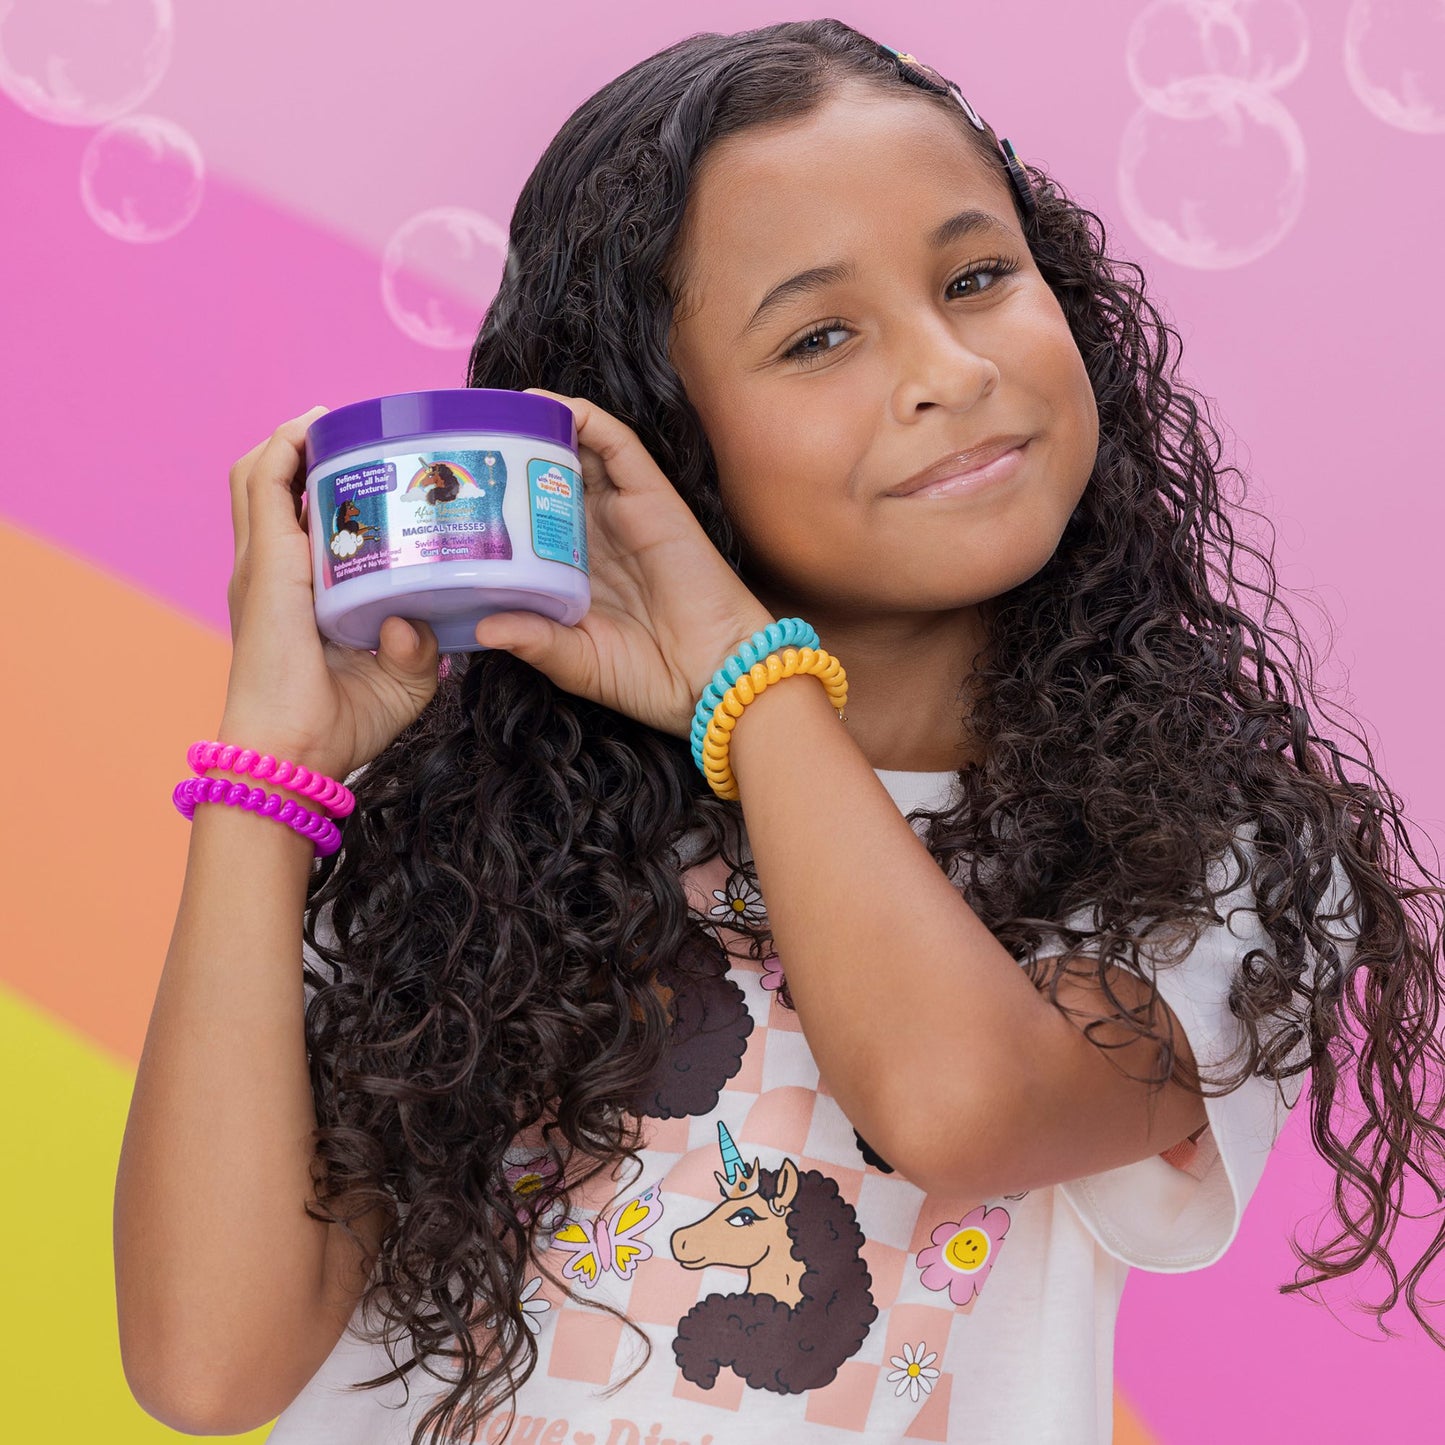 Afro Unicorn model holding a Swirls & Twirls Curl Cream product.